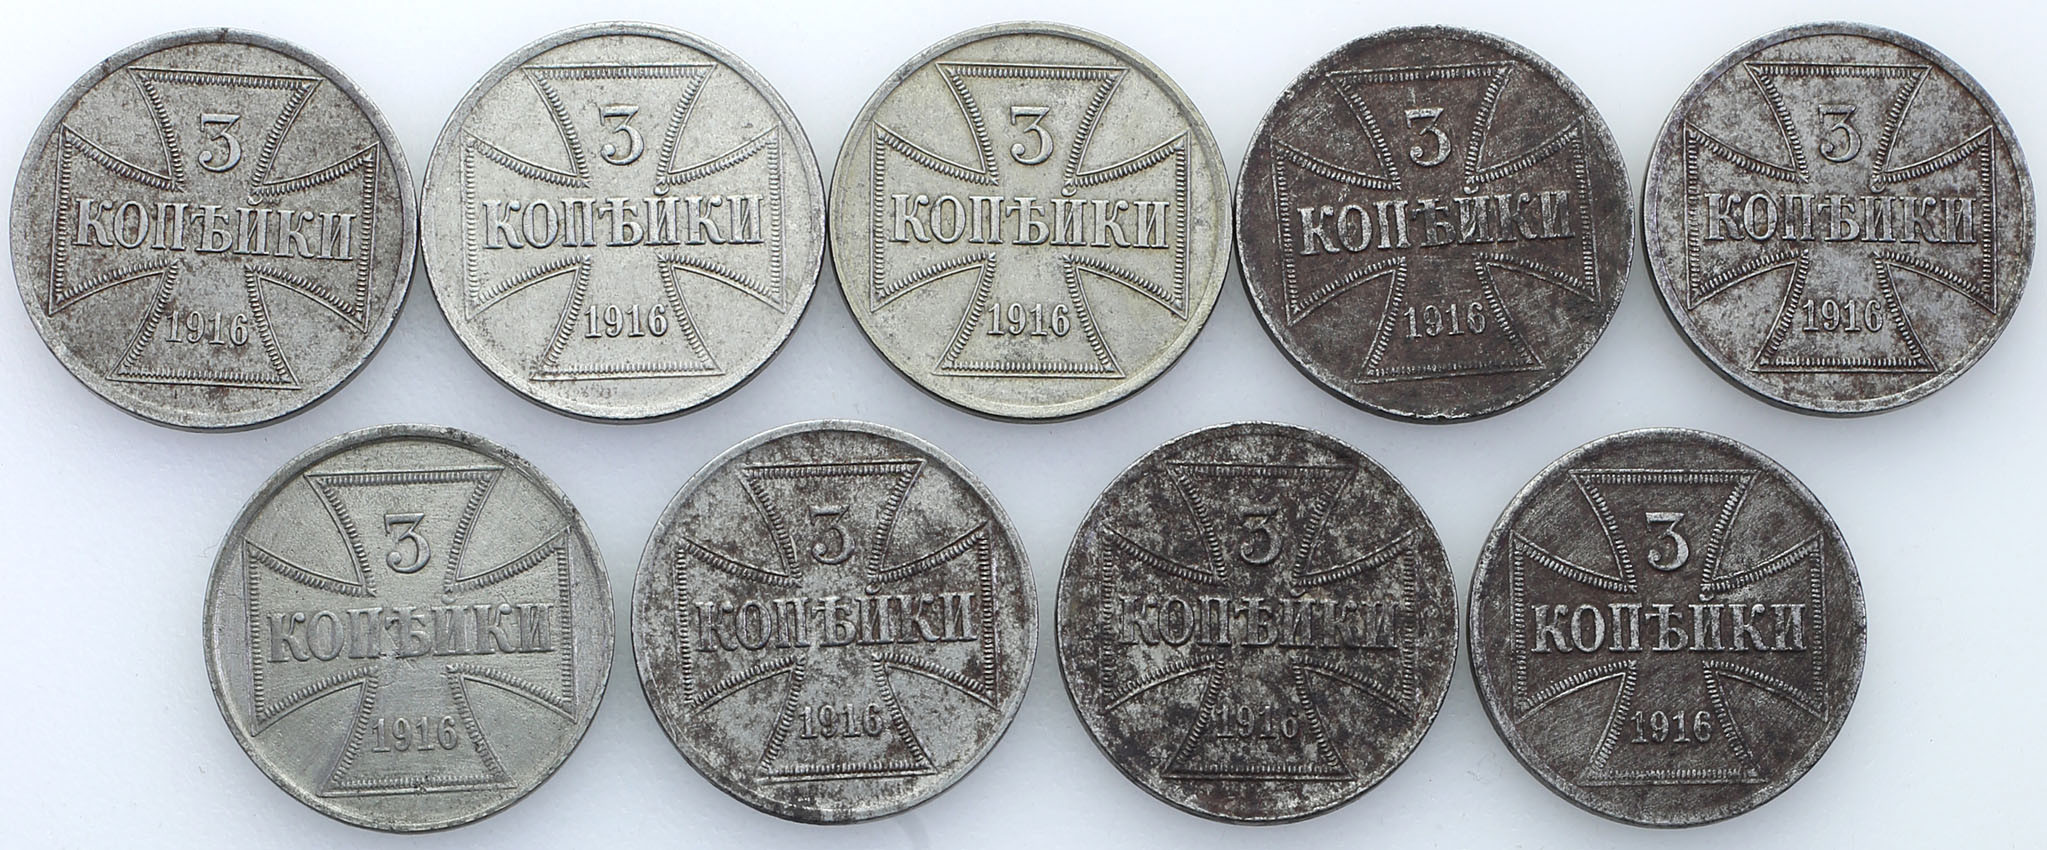 Polska, OST. 3 kopiejki 1916 - zestaw 9 monet